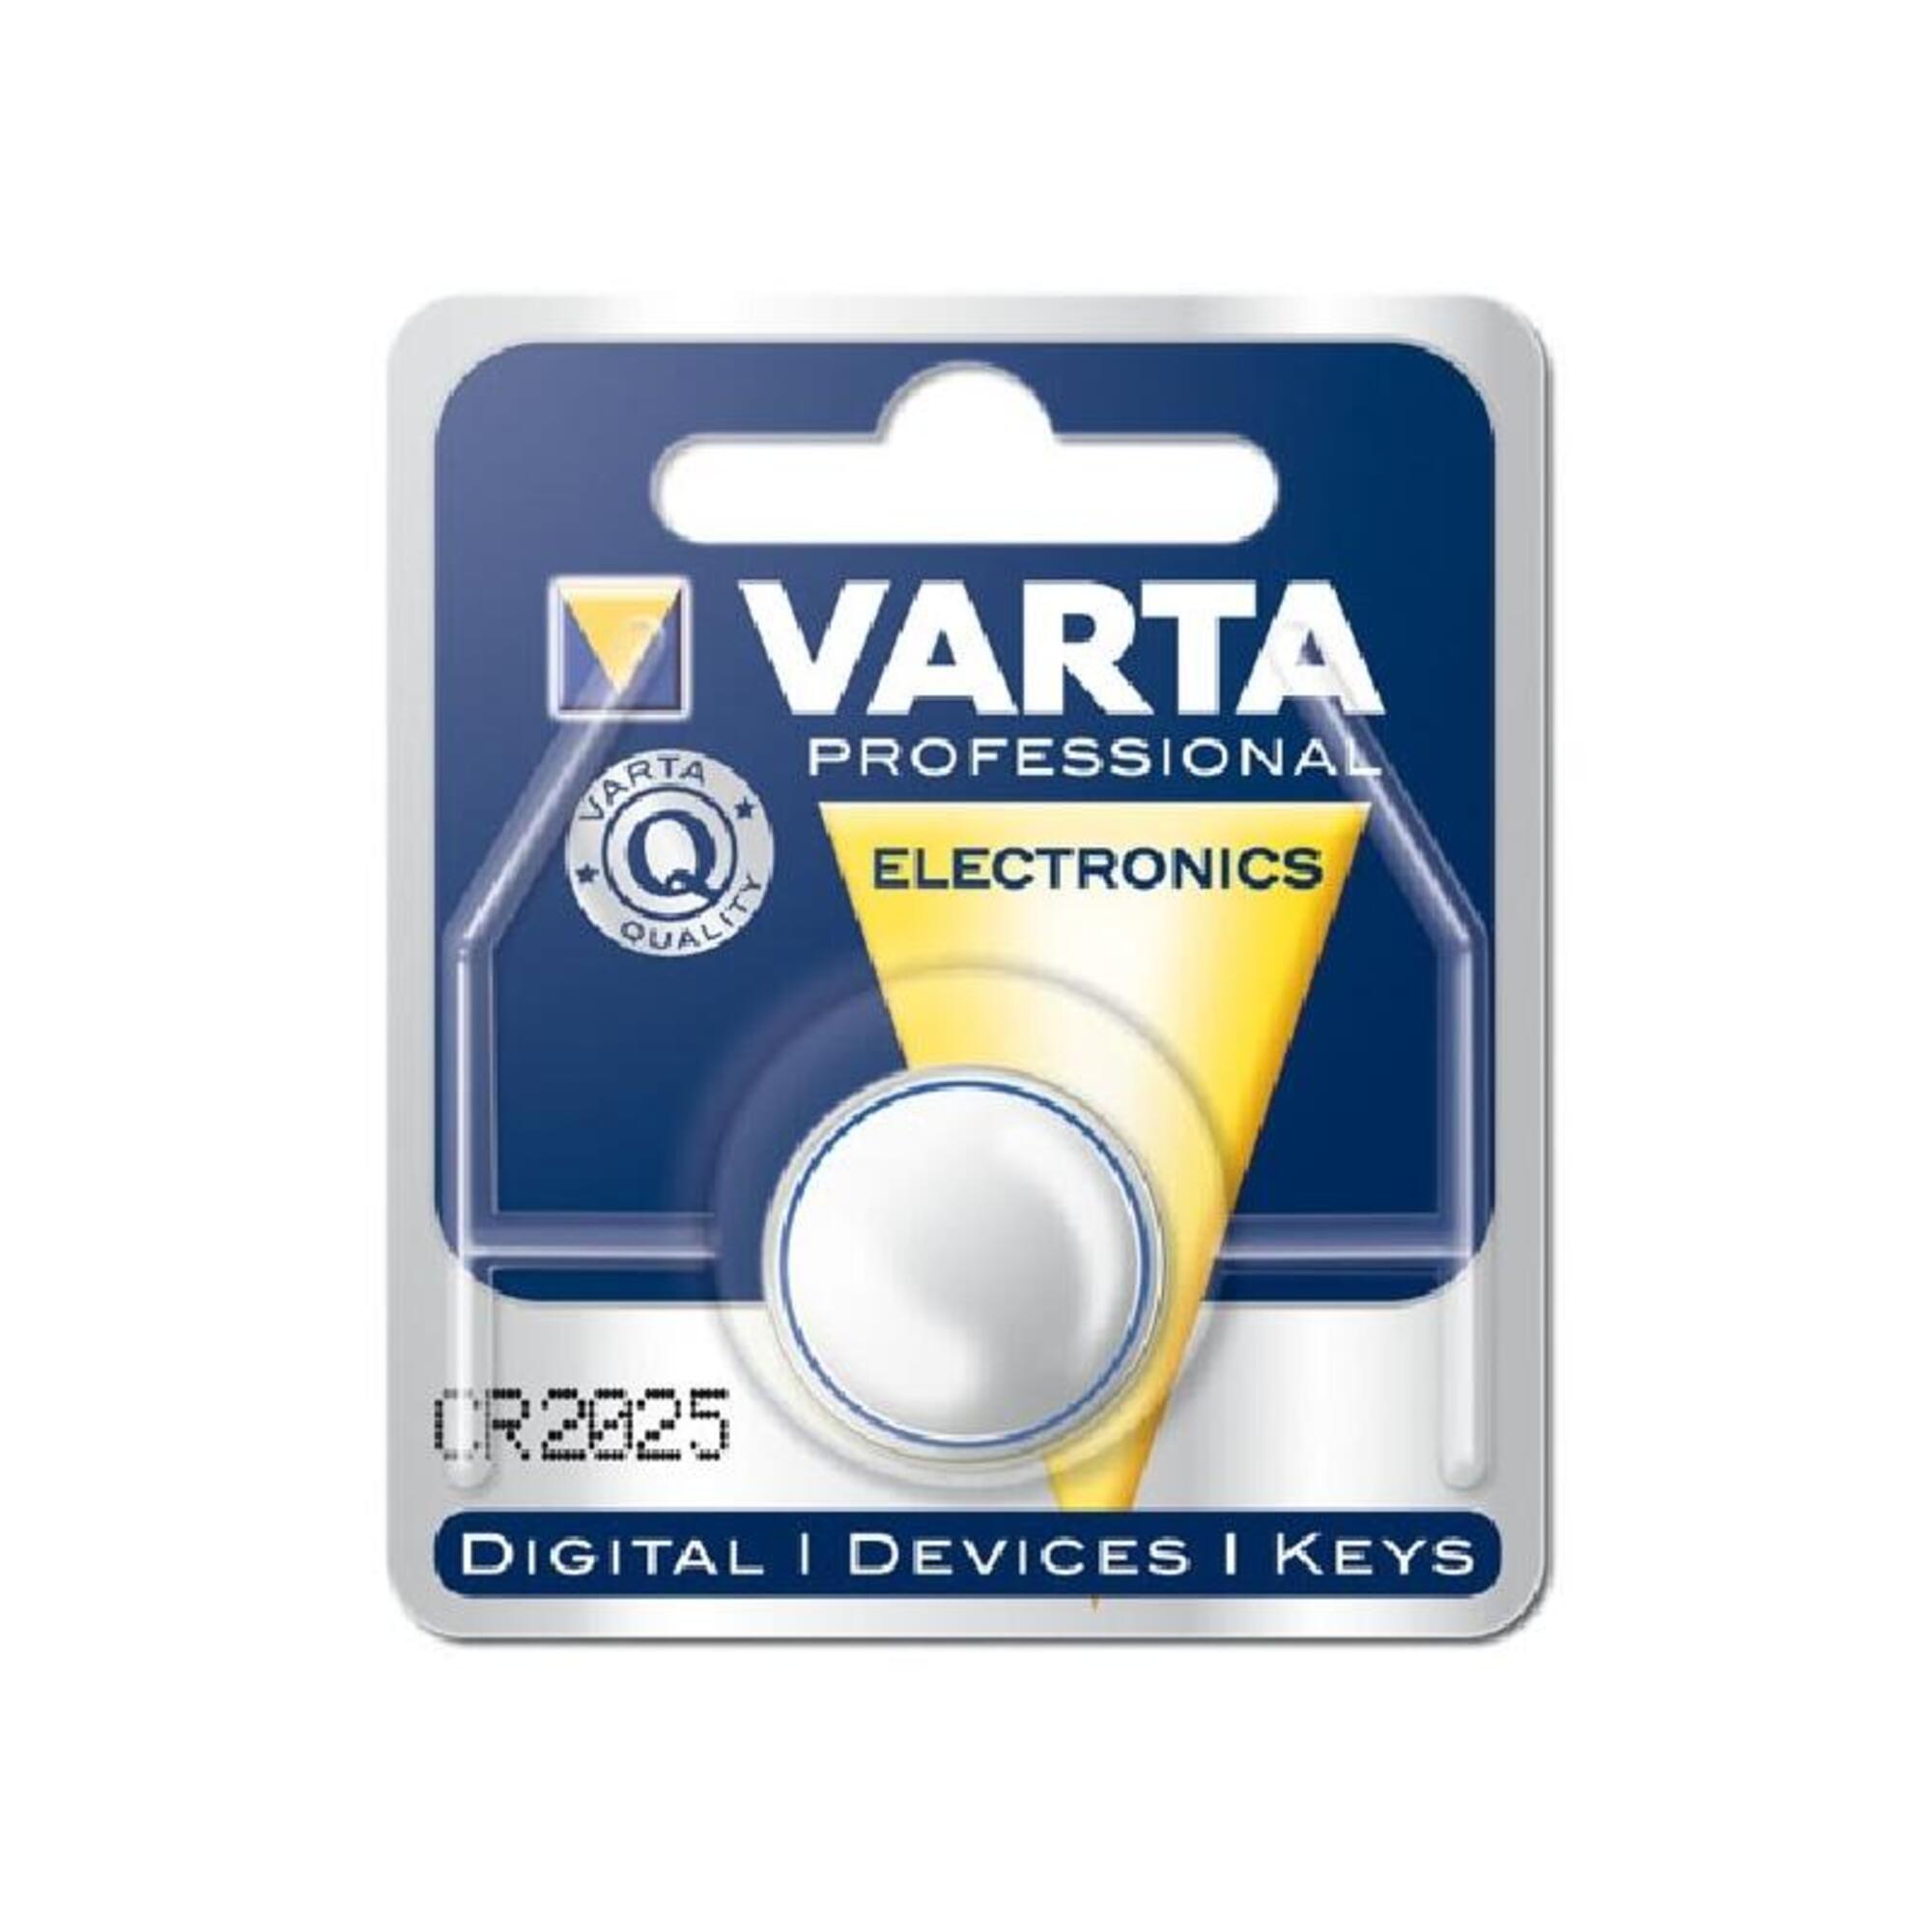 Pile bouton Varta CR2025 Lithium 3V